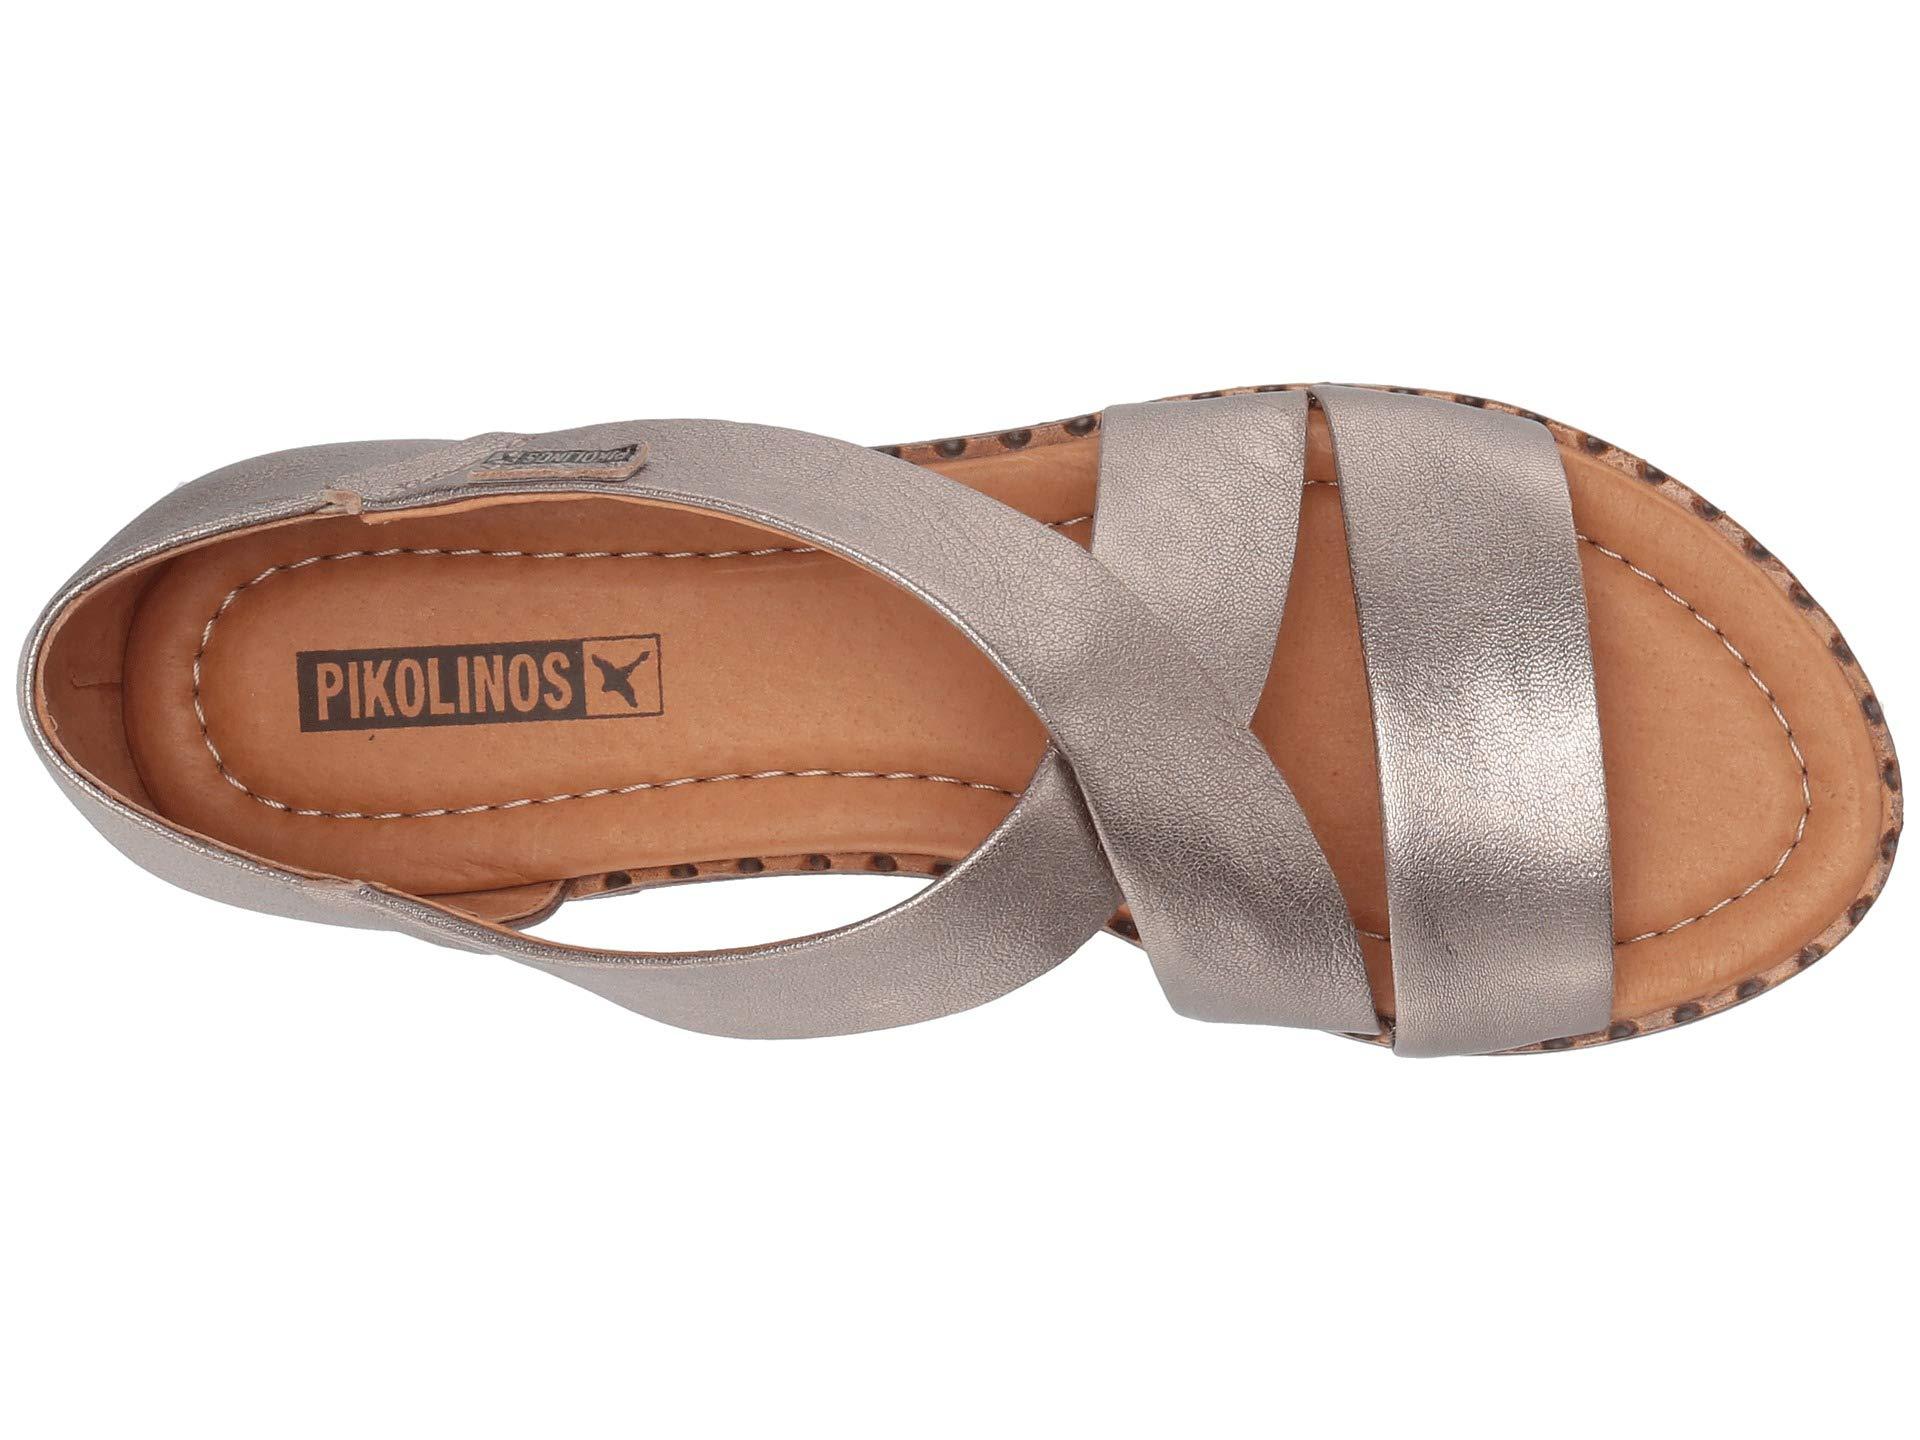 Pikolinos Leather Algar W0x-0552cl (stone) Women's Shoes - Lyst